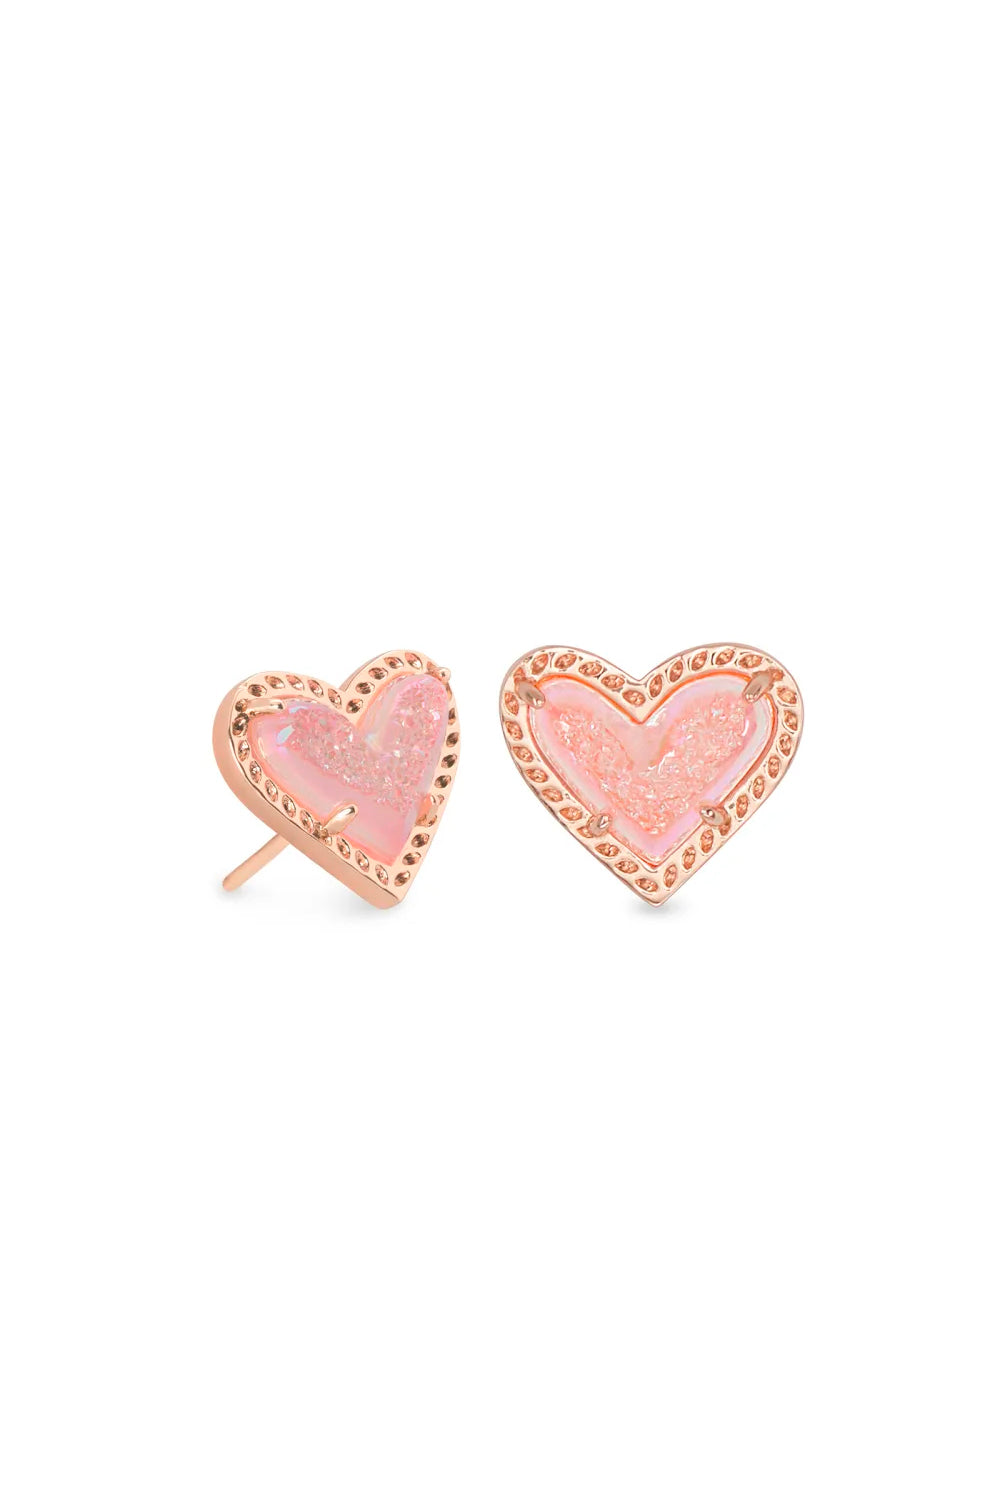 Kendra Scott: Ari Heart Rose Gold Stud Earrings - Light Pink Drusy | Makk Fashions